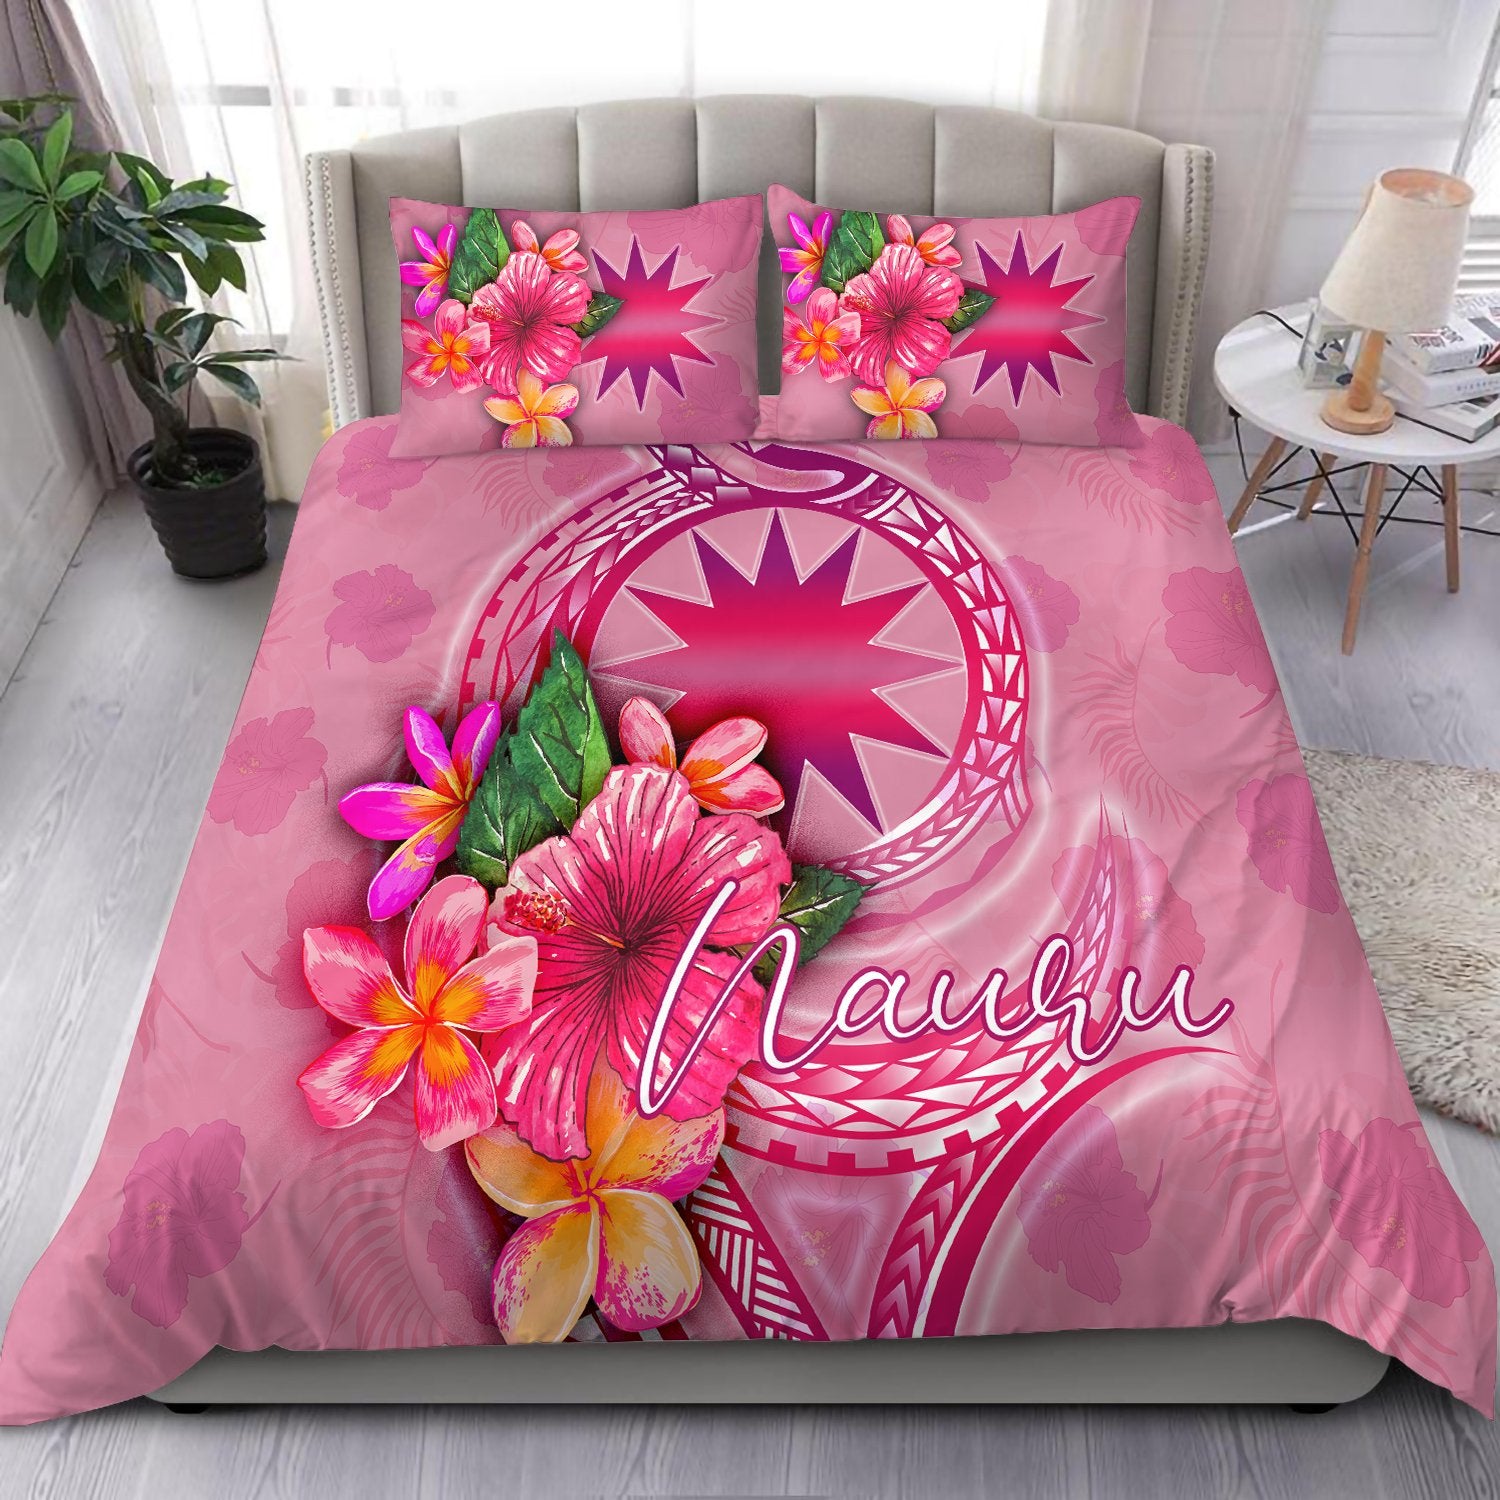 Nauru Polynesian Bedding Set - Floral With Seal Pink Pink - Polynesian Pride